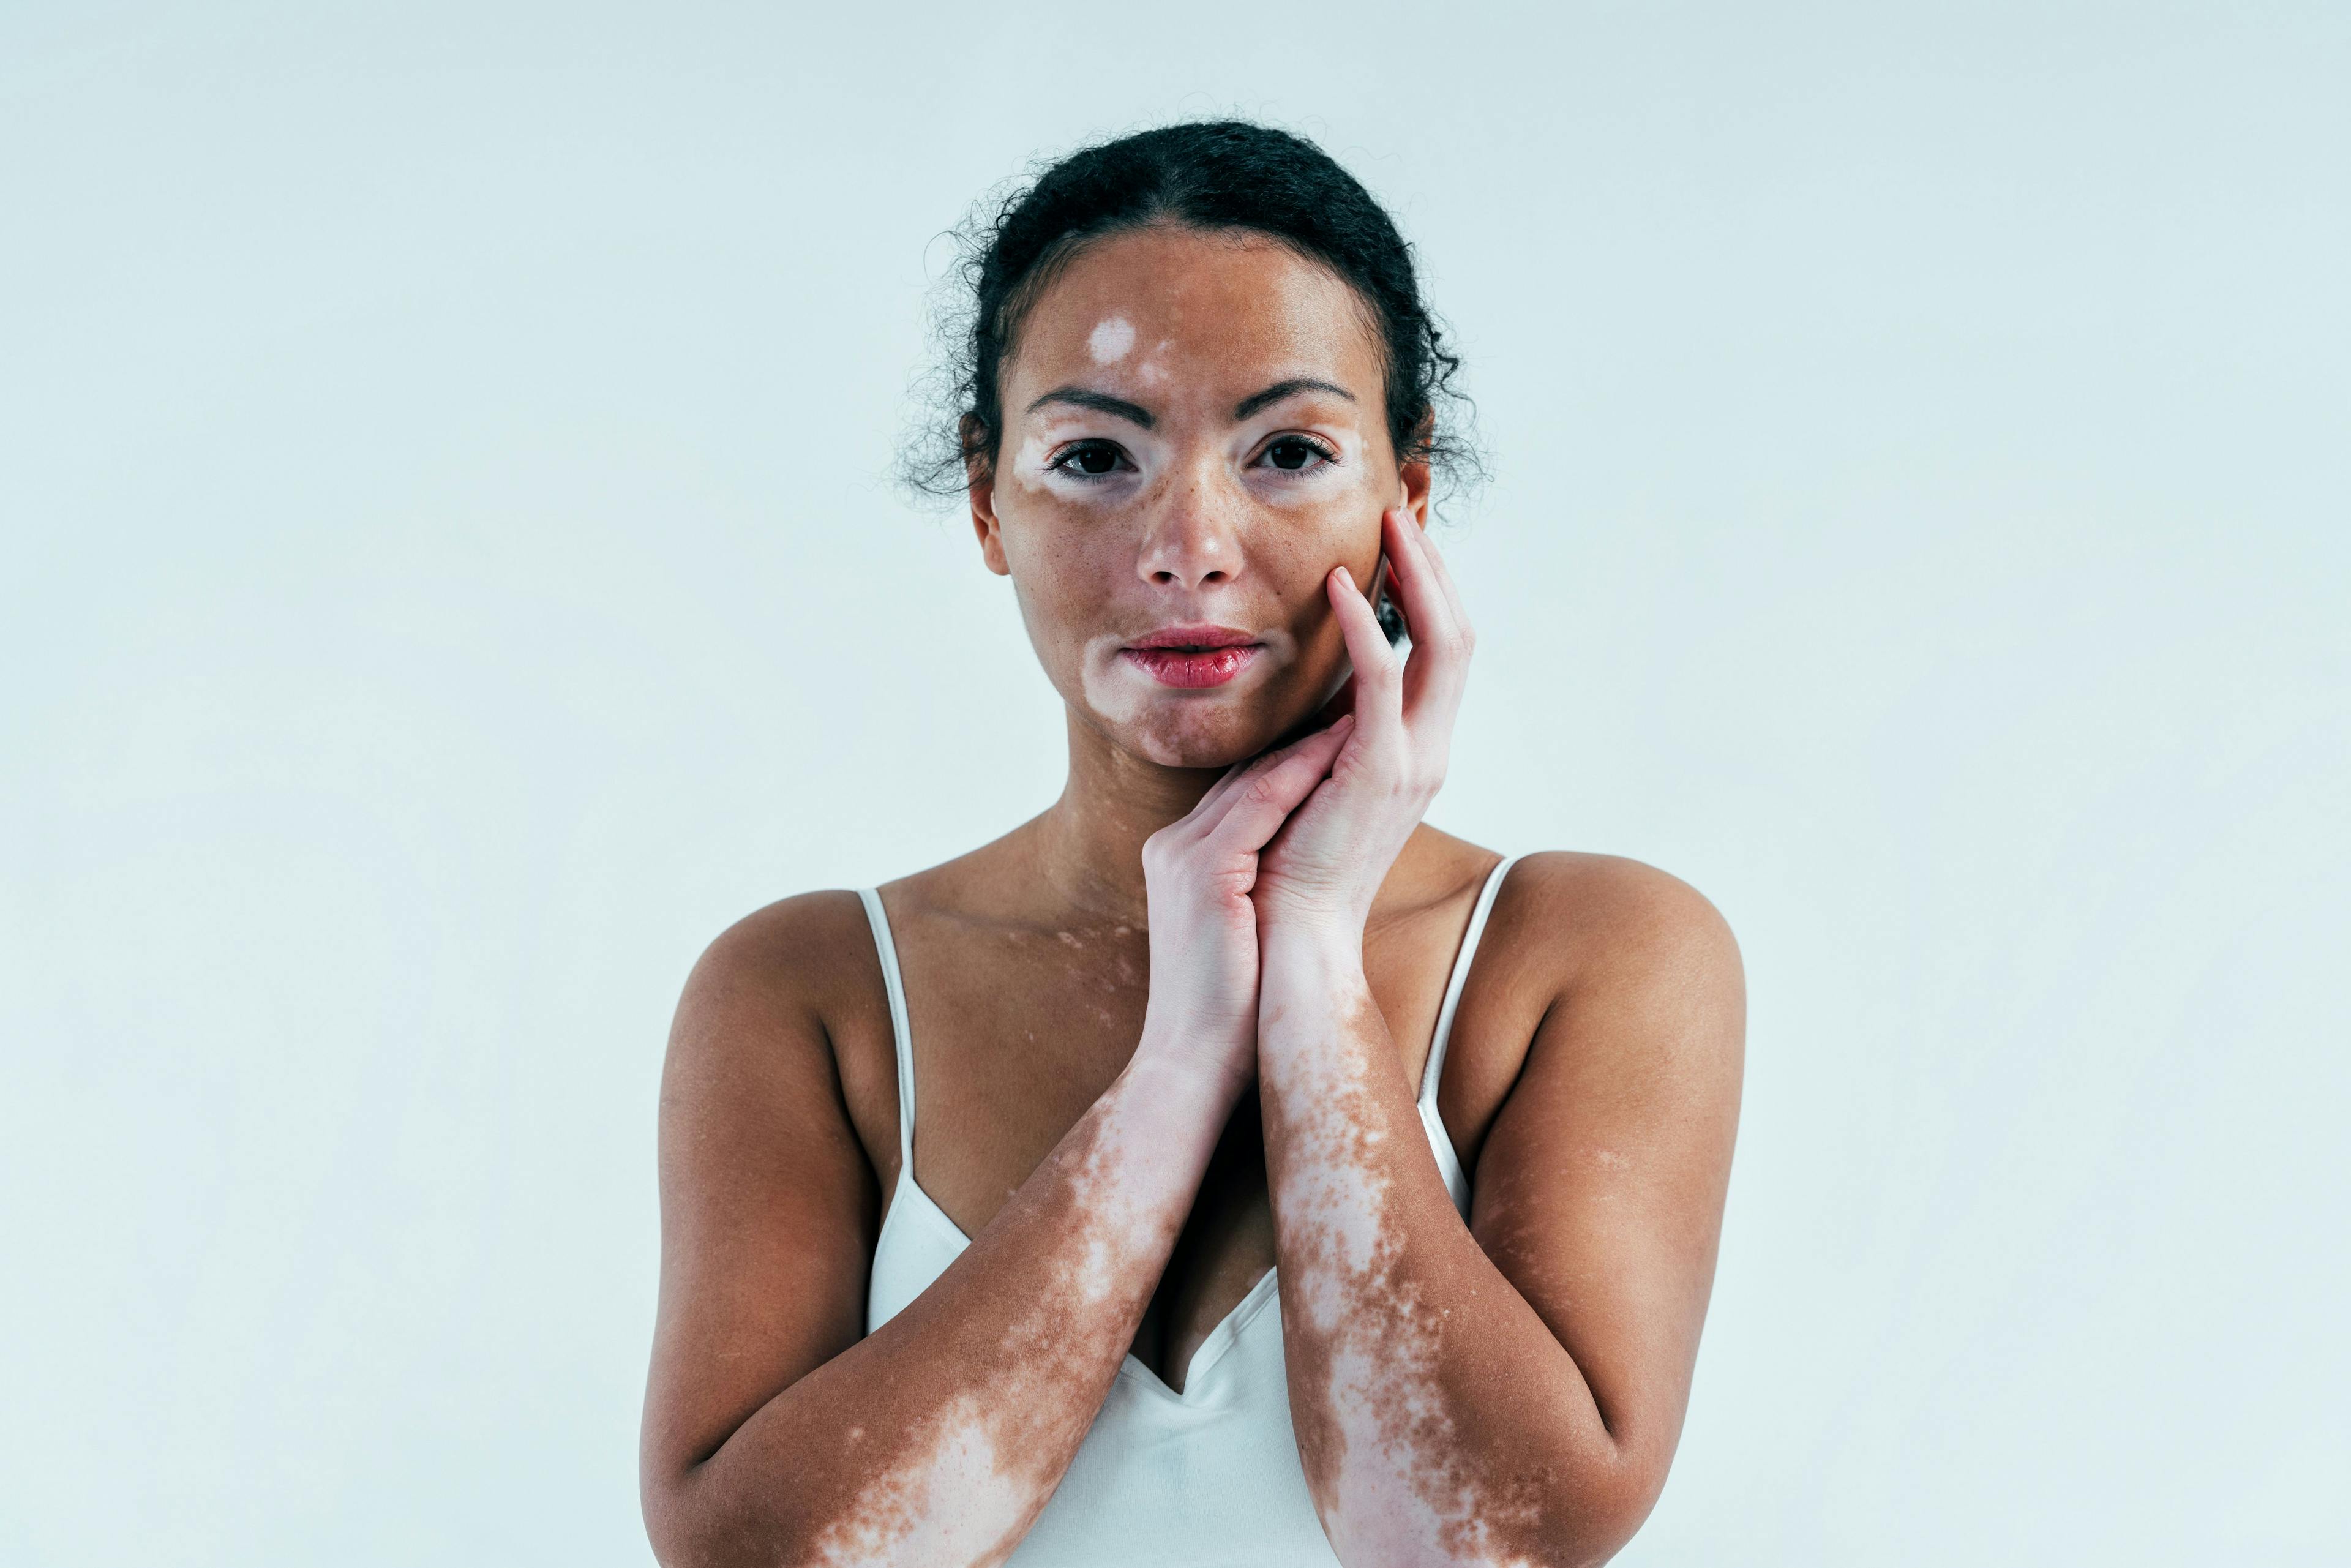 Woman with vitiligo | Image Credit: oneinchpunch - stock.adobe.com